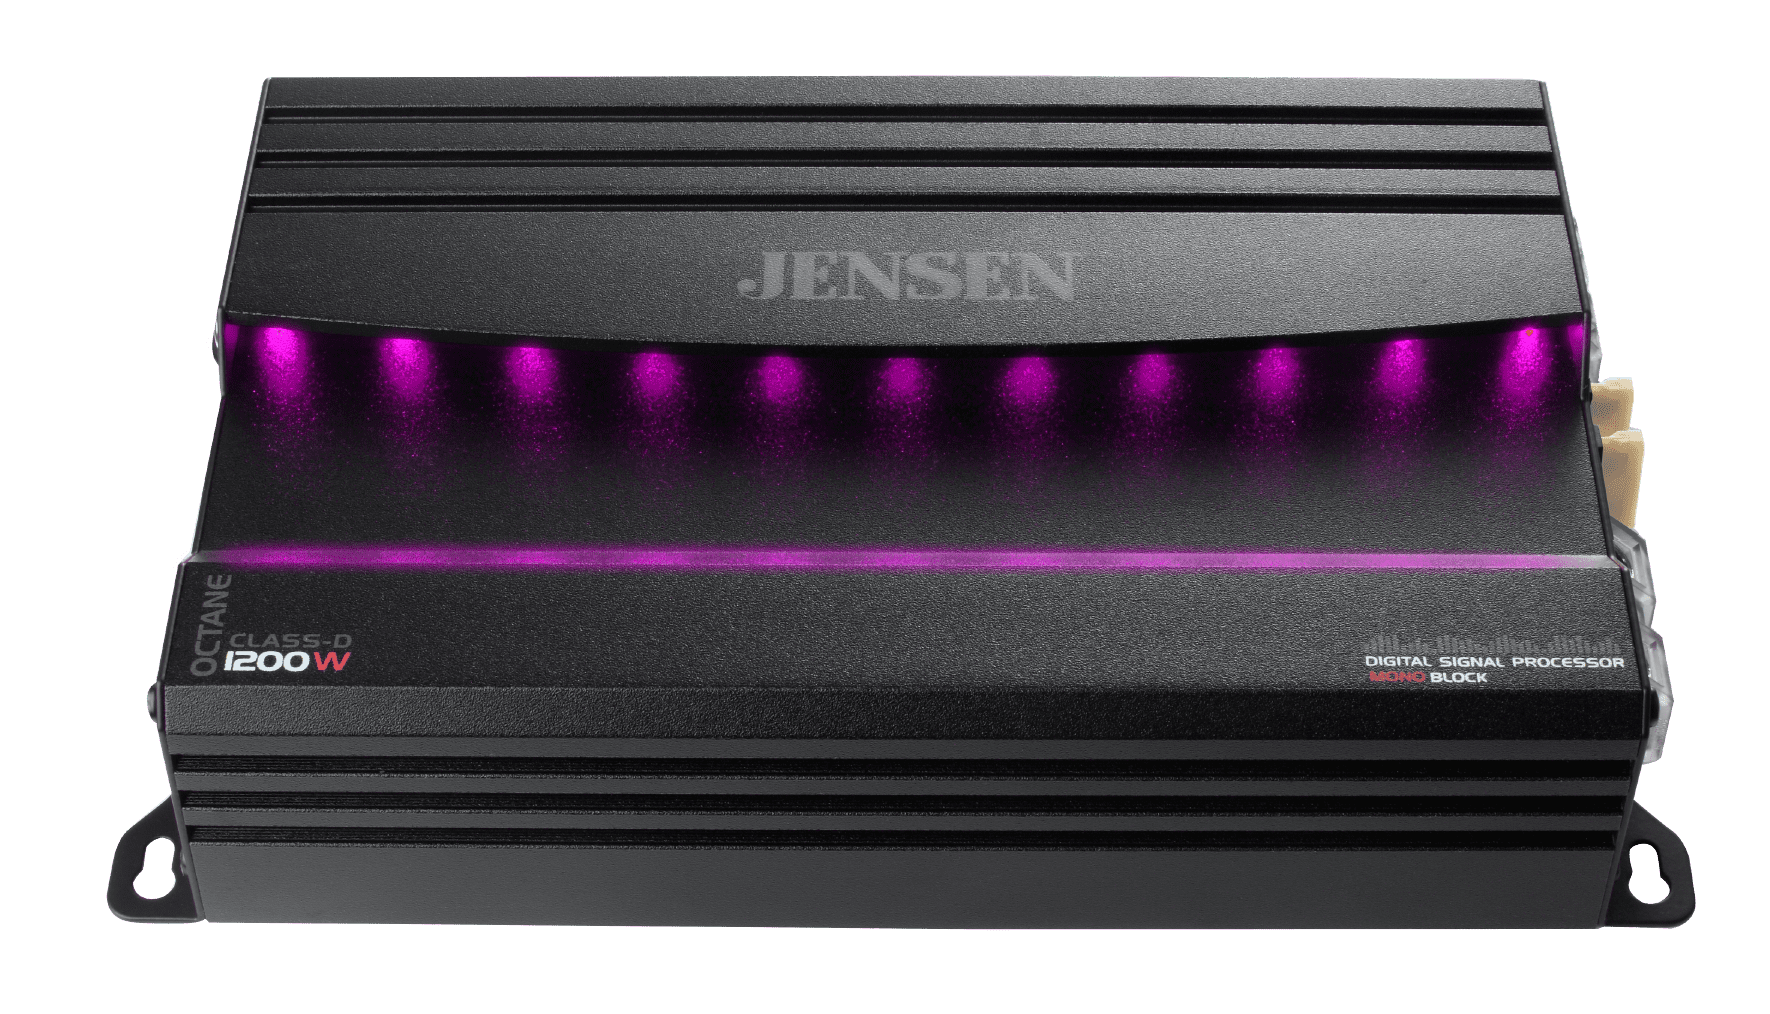 JENSEN XDA91RB Class-D Mono Amplifier with 240 Watts x 1 RMS and 1200 Watts Peak Power and RGB Illumination & System Control via Bluetooth App, Black